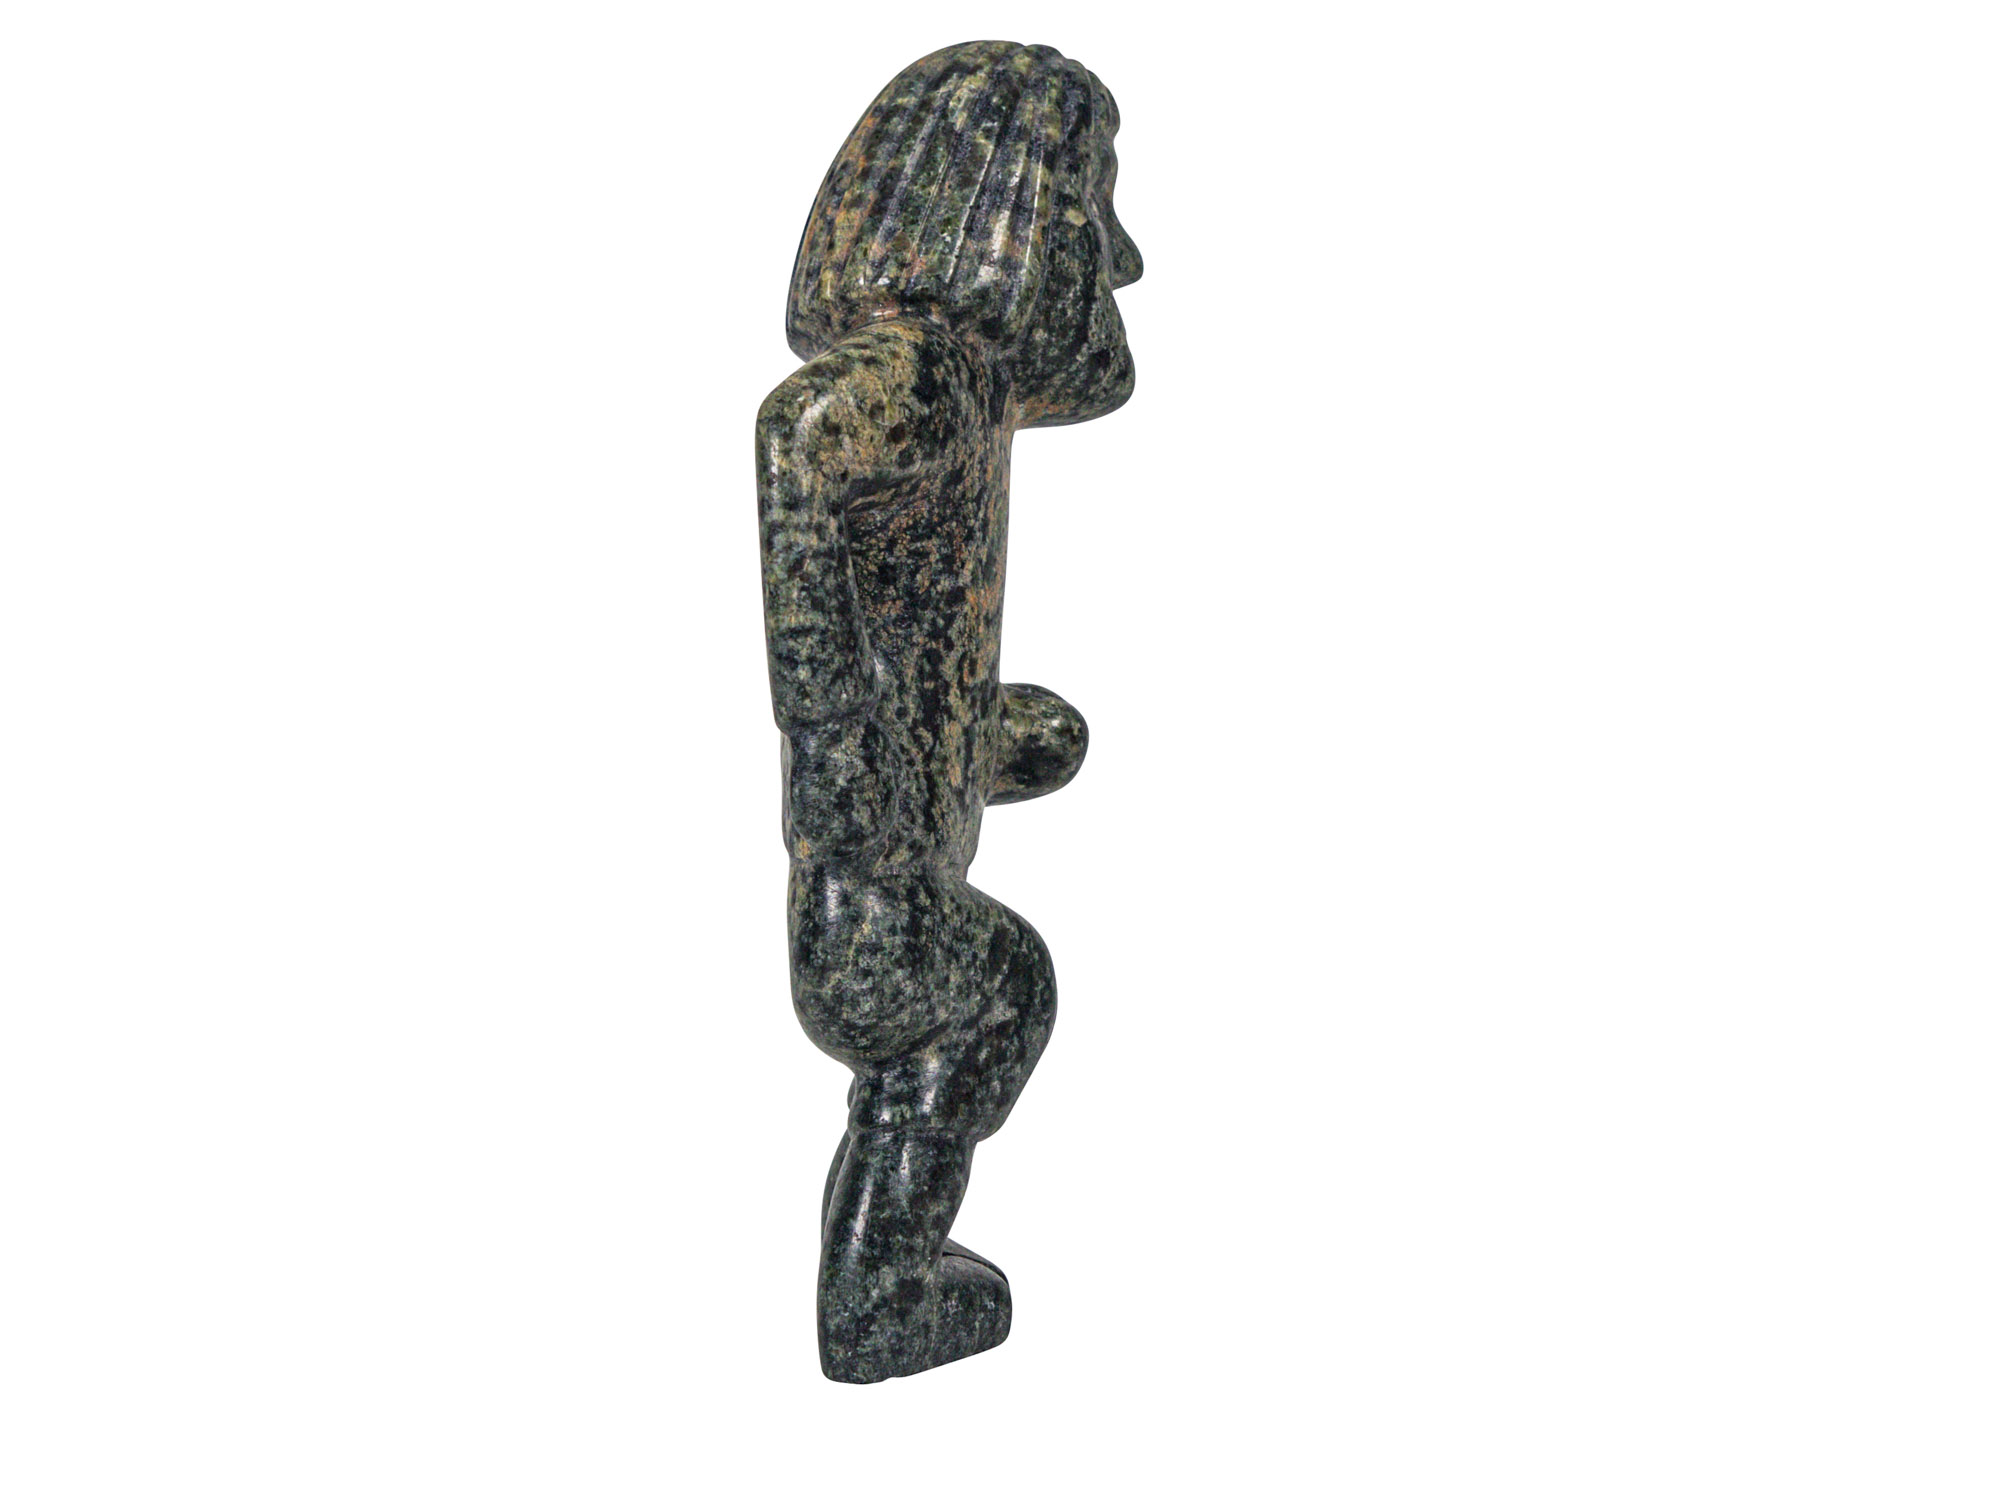 Inuit Soapstone Carving: Man: Gallery Item - 44-G14 (10URM1)